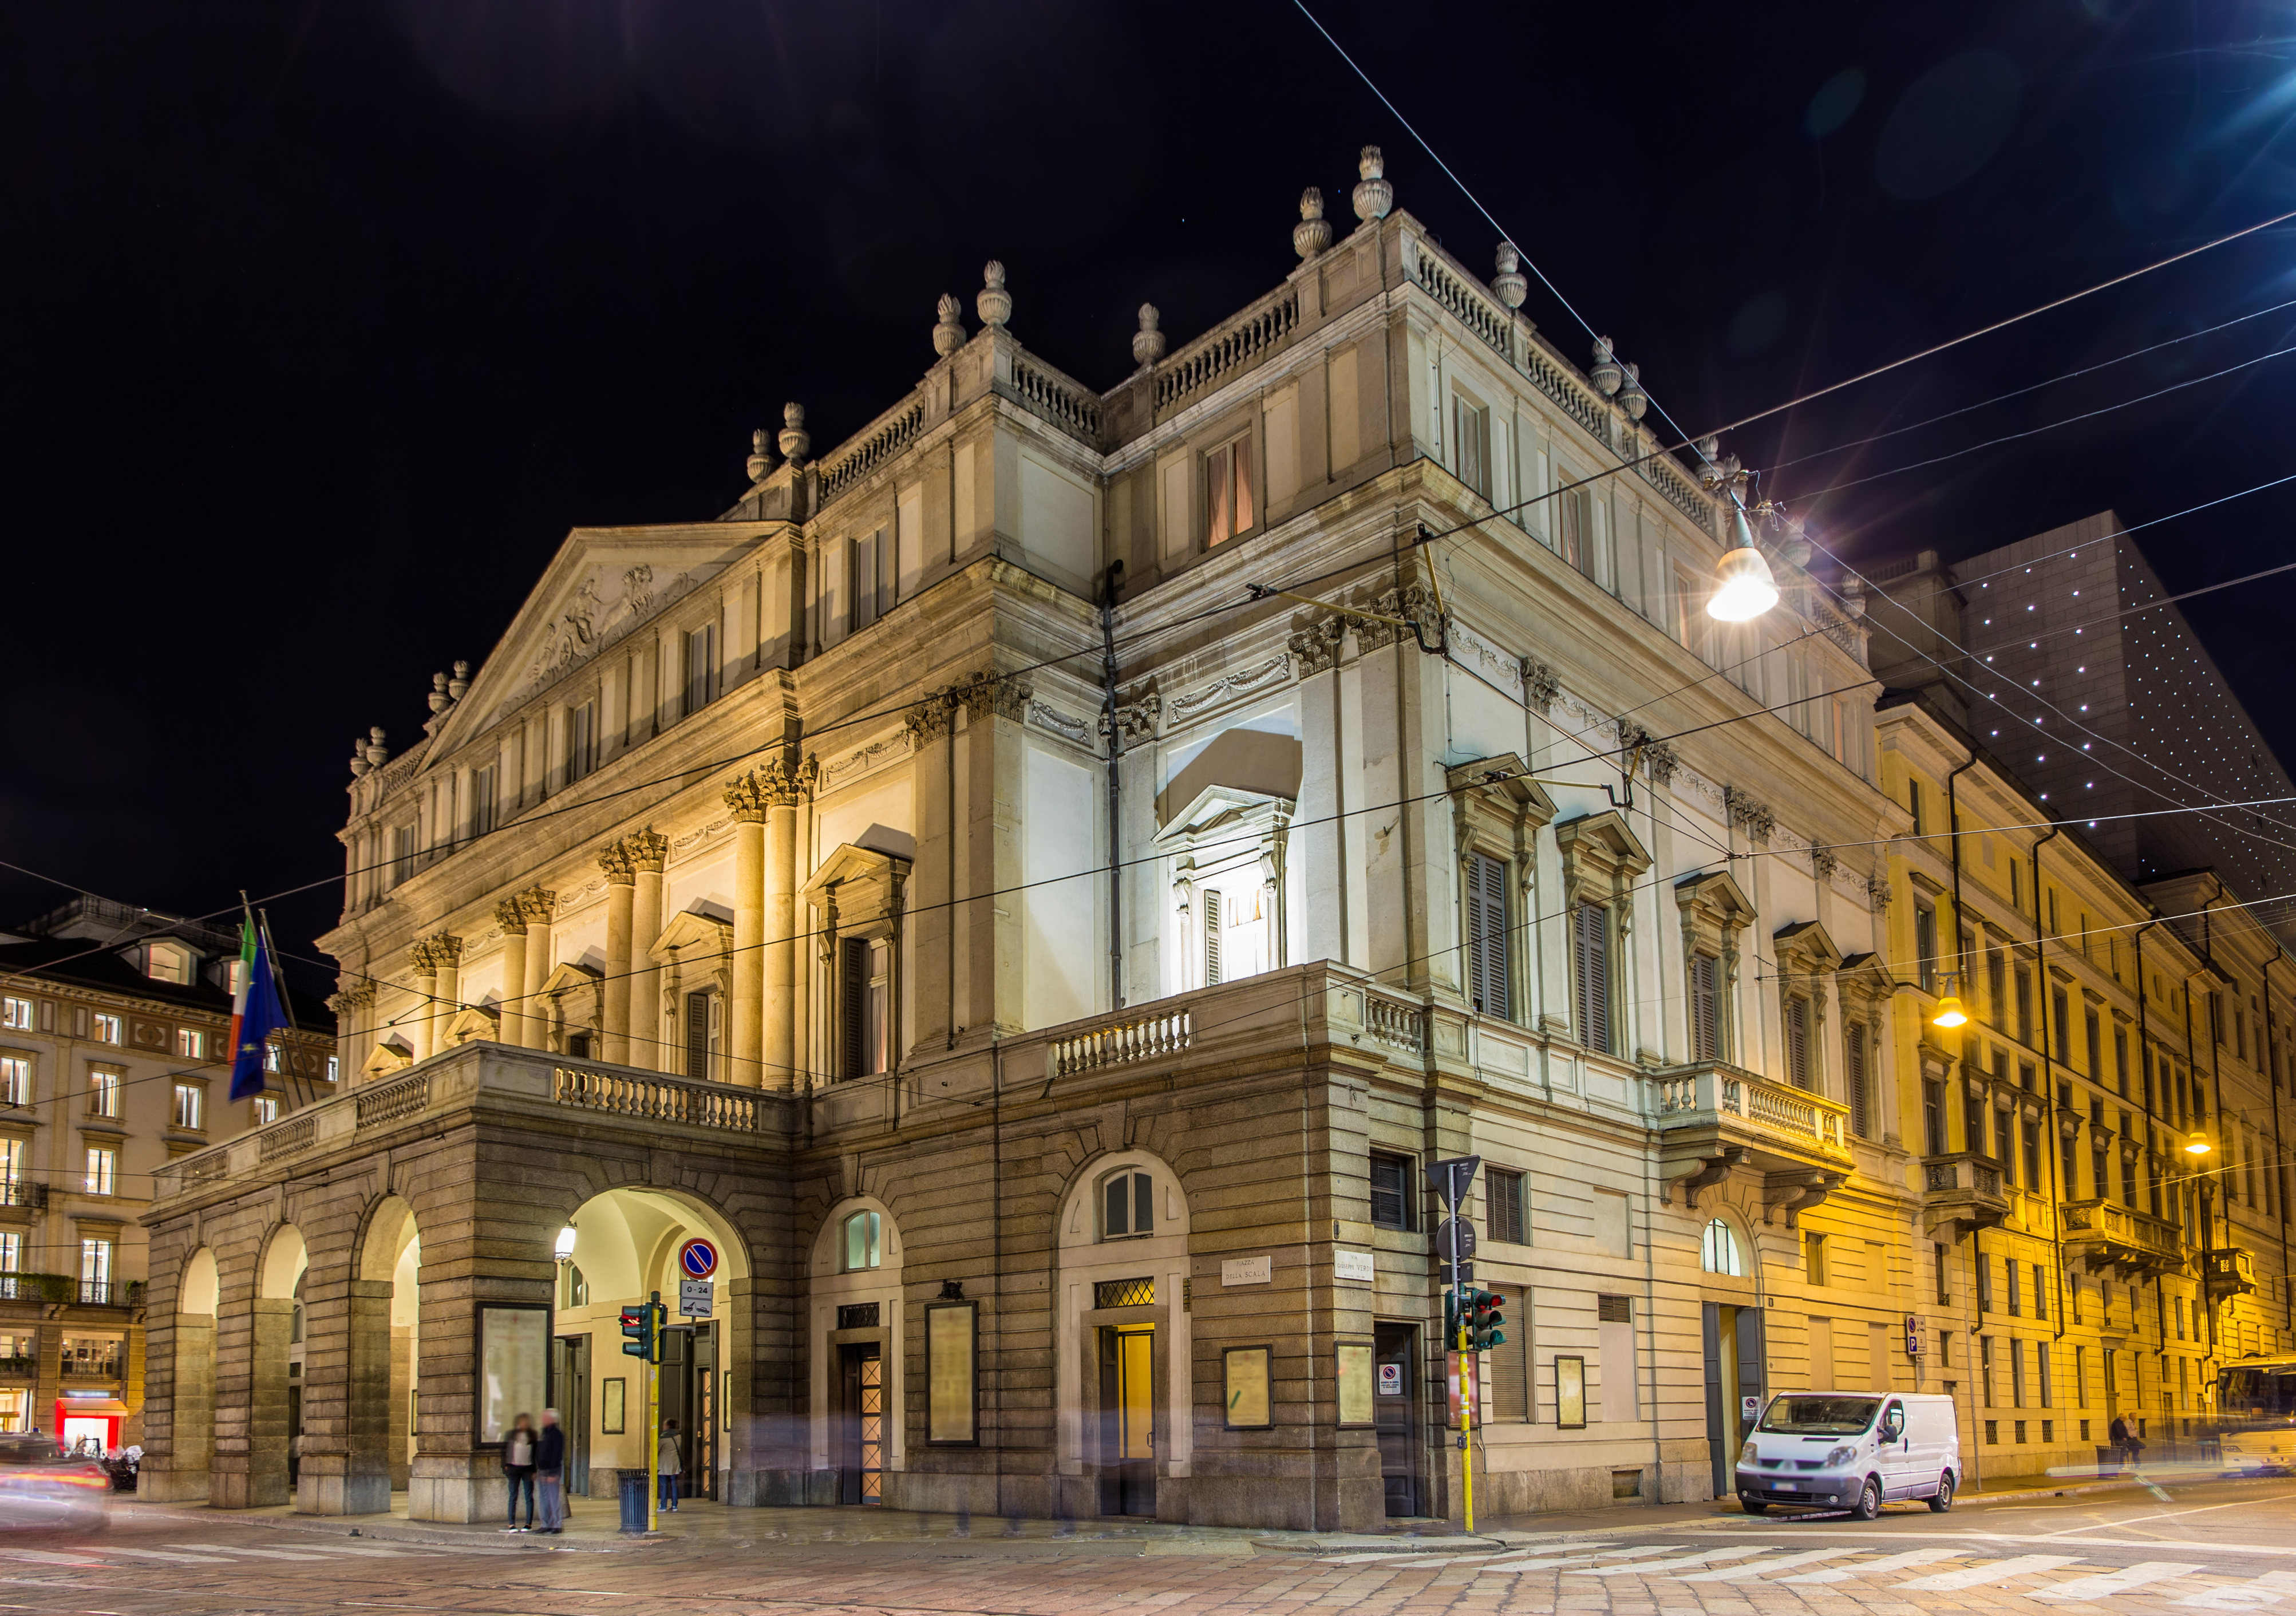 Teatro alla Scala: opera house in Milan, Italy - Italia.it